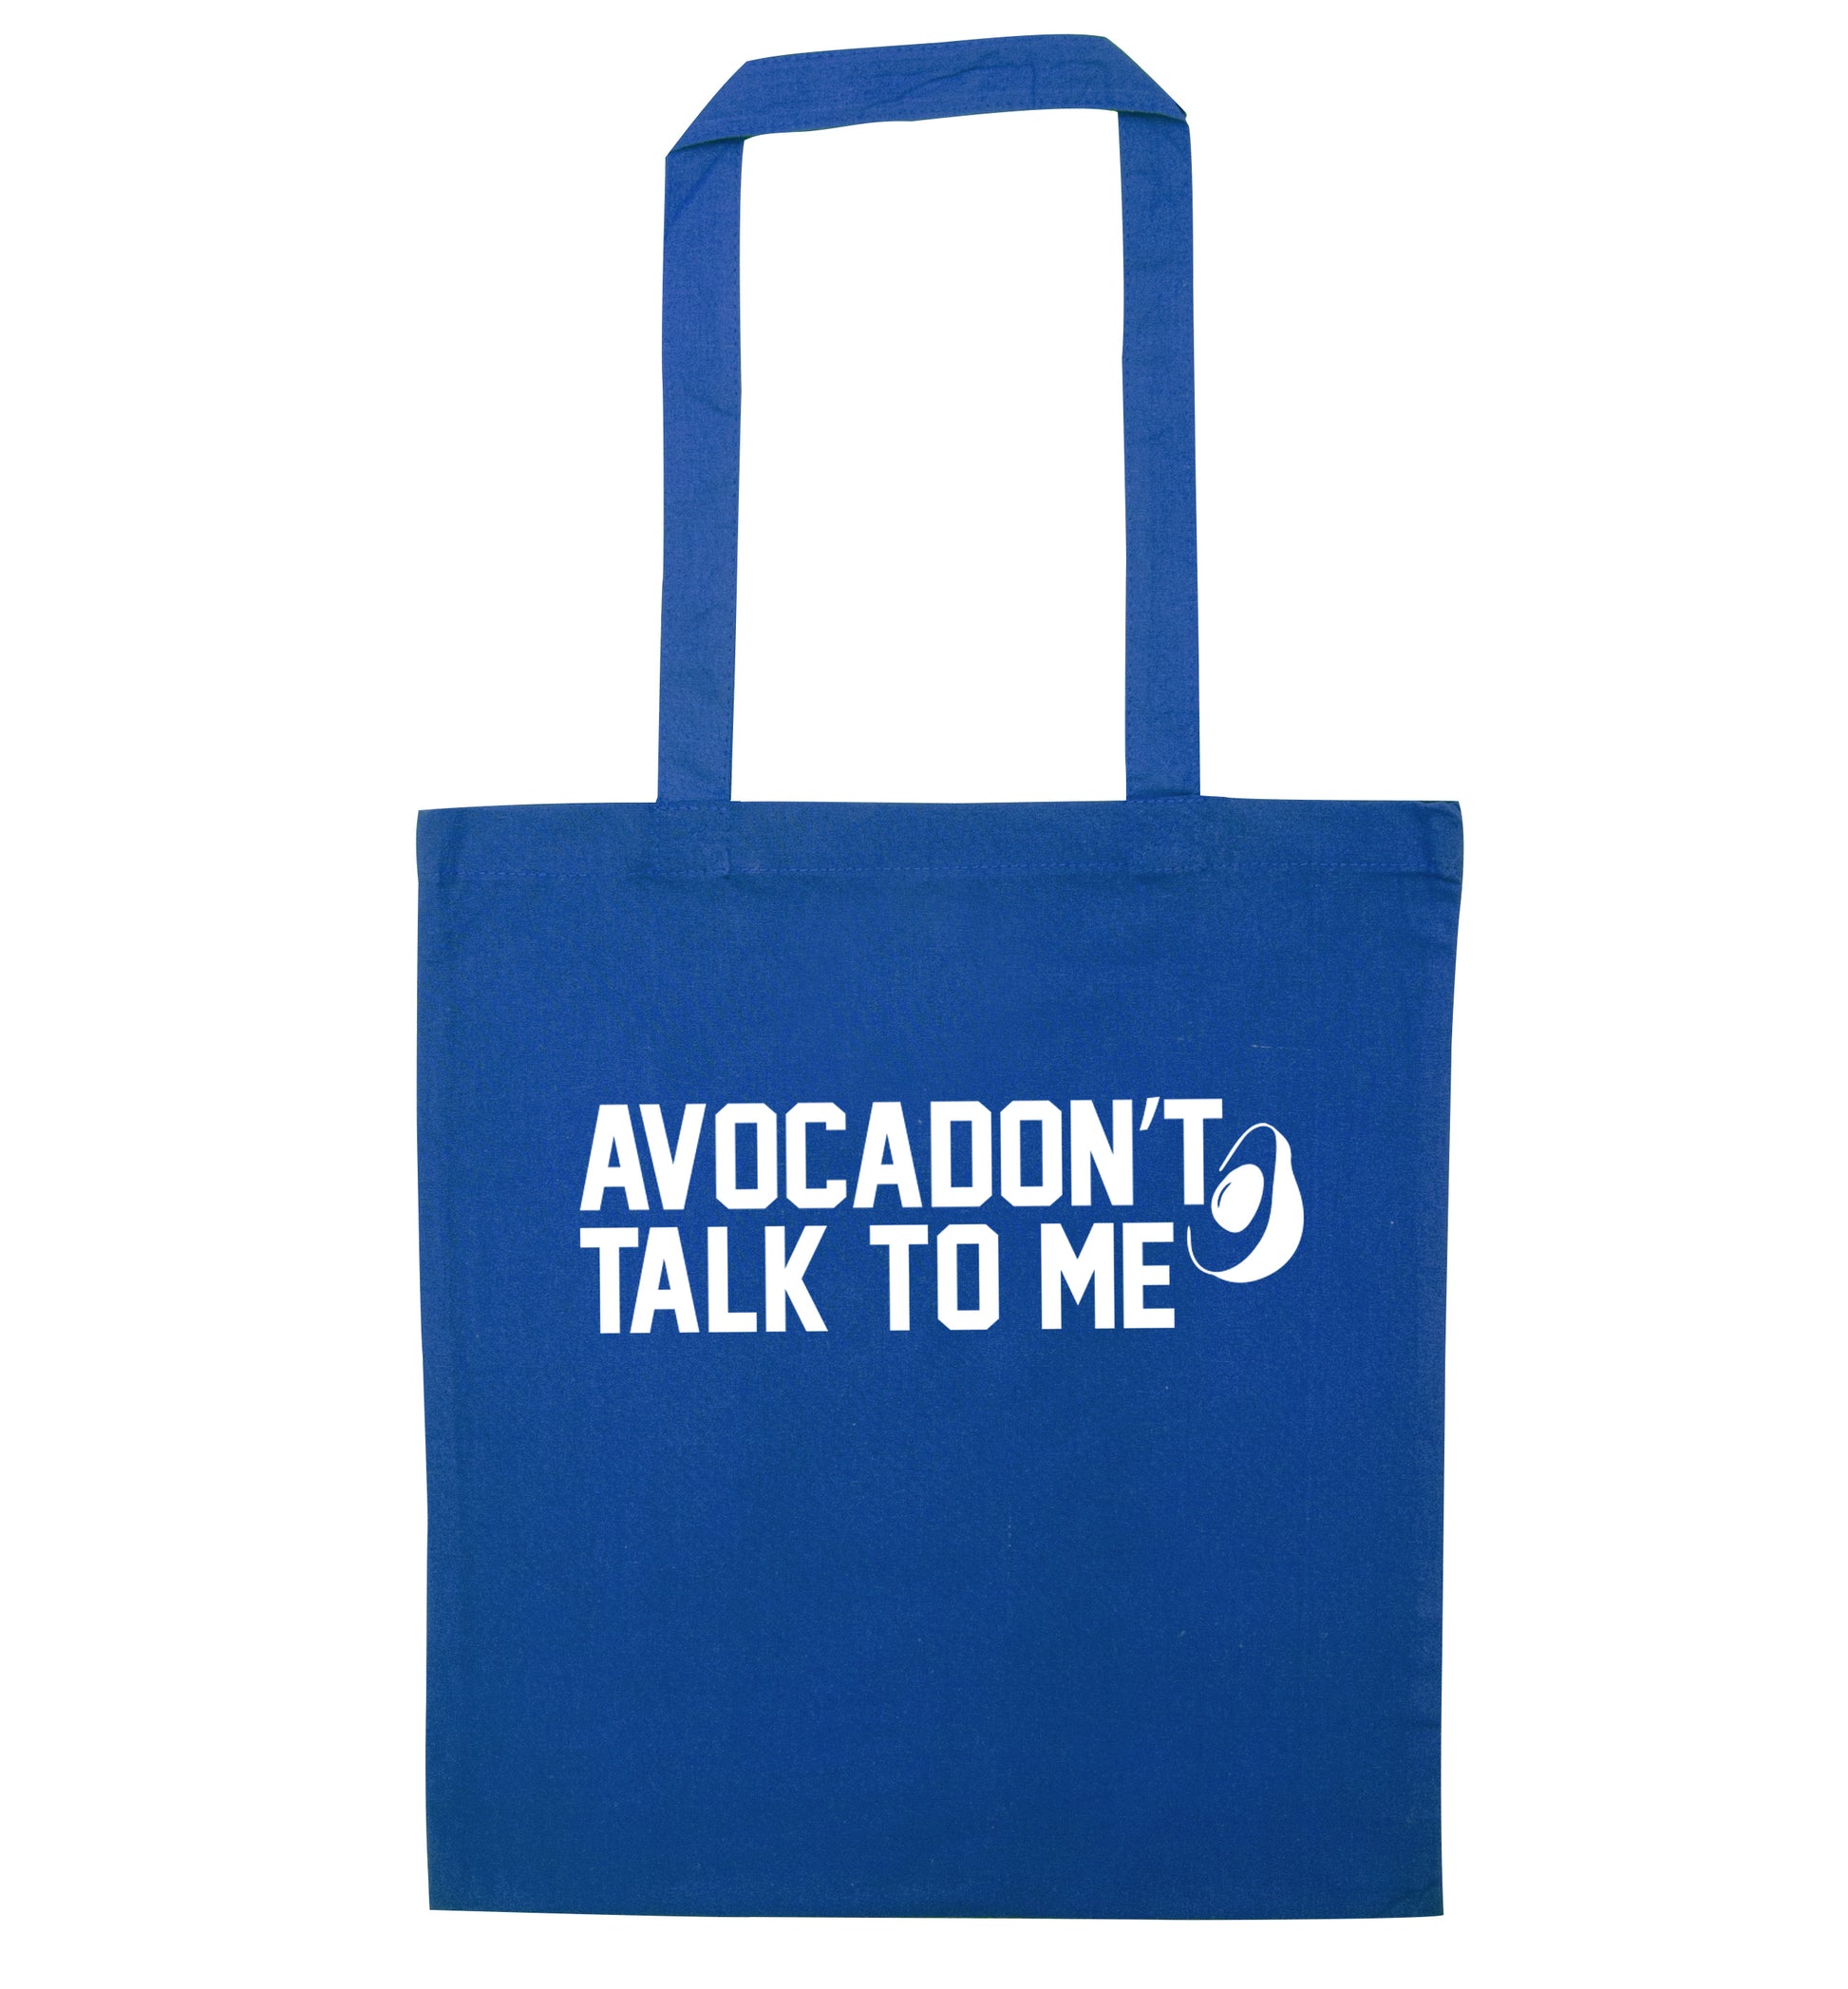 Avocadon't talk to me blue tote bag